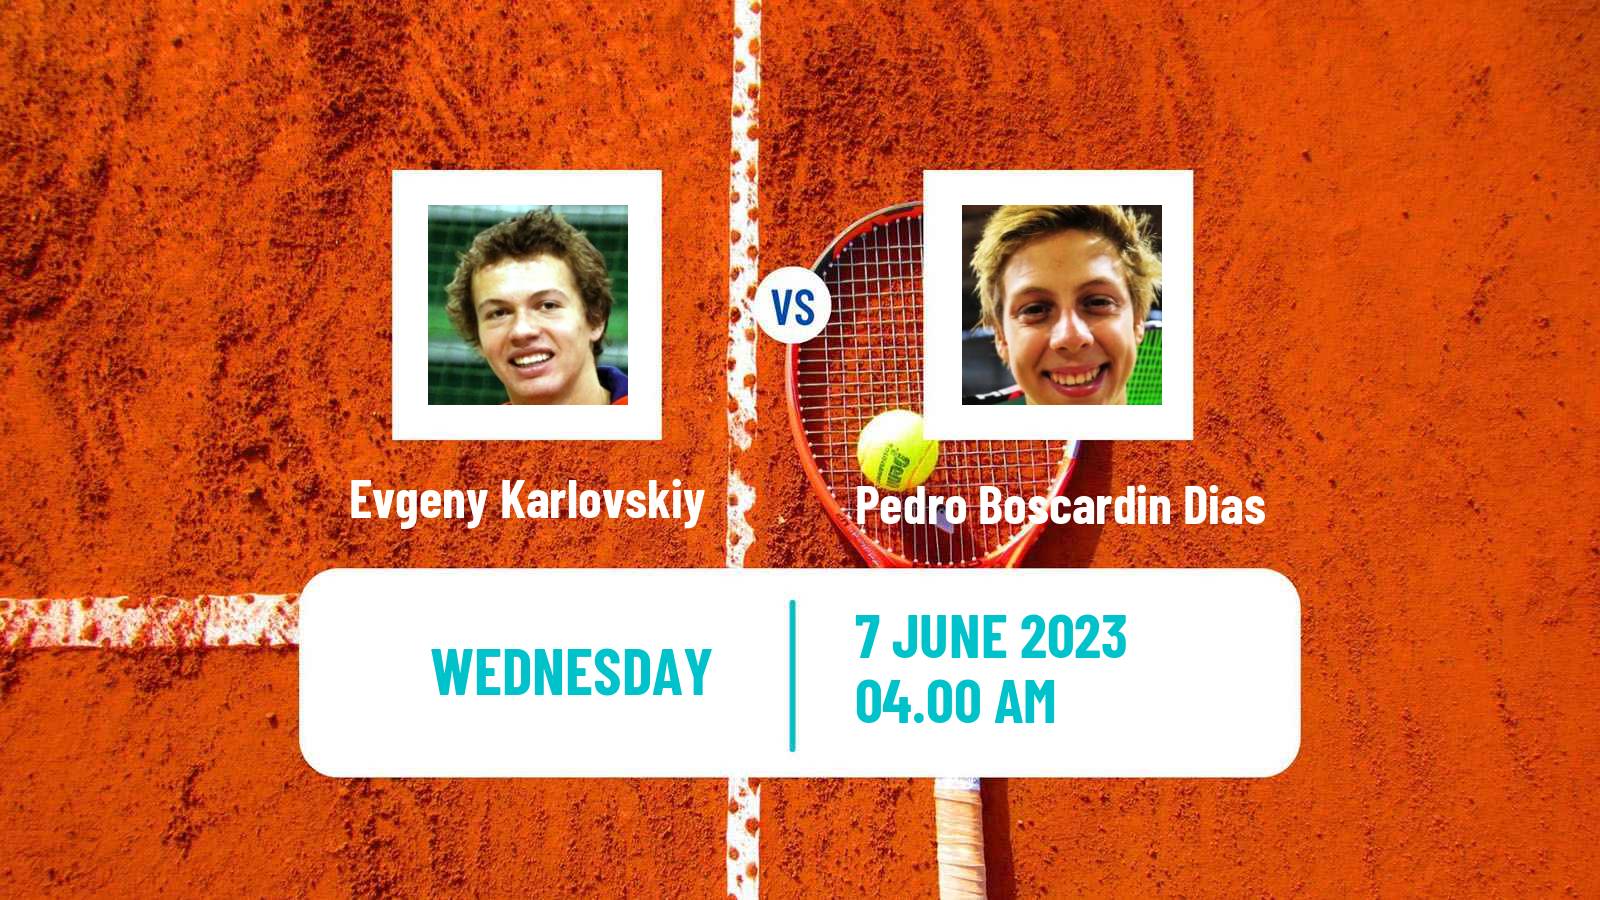 Tennis ITF M25 Kursumlijska Banja 3 Men Evgeny Karlovskiy - Pedro Boscardin Dias